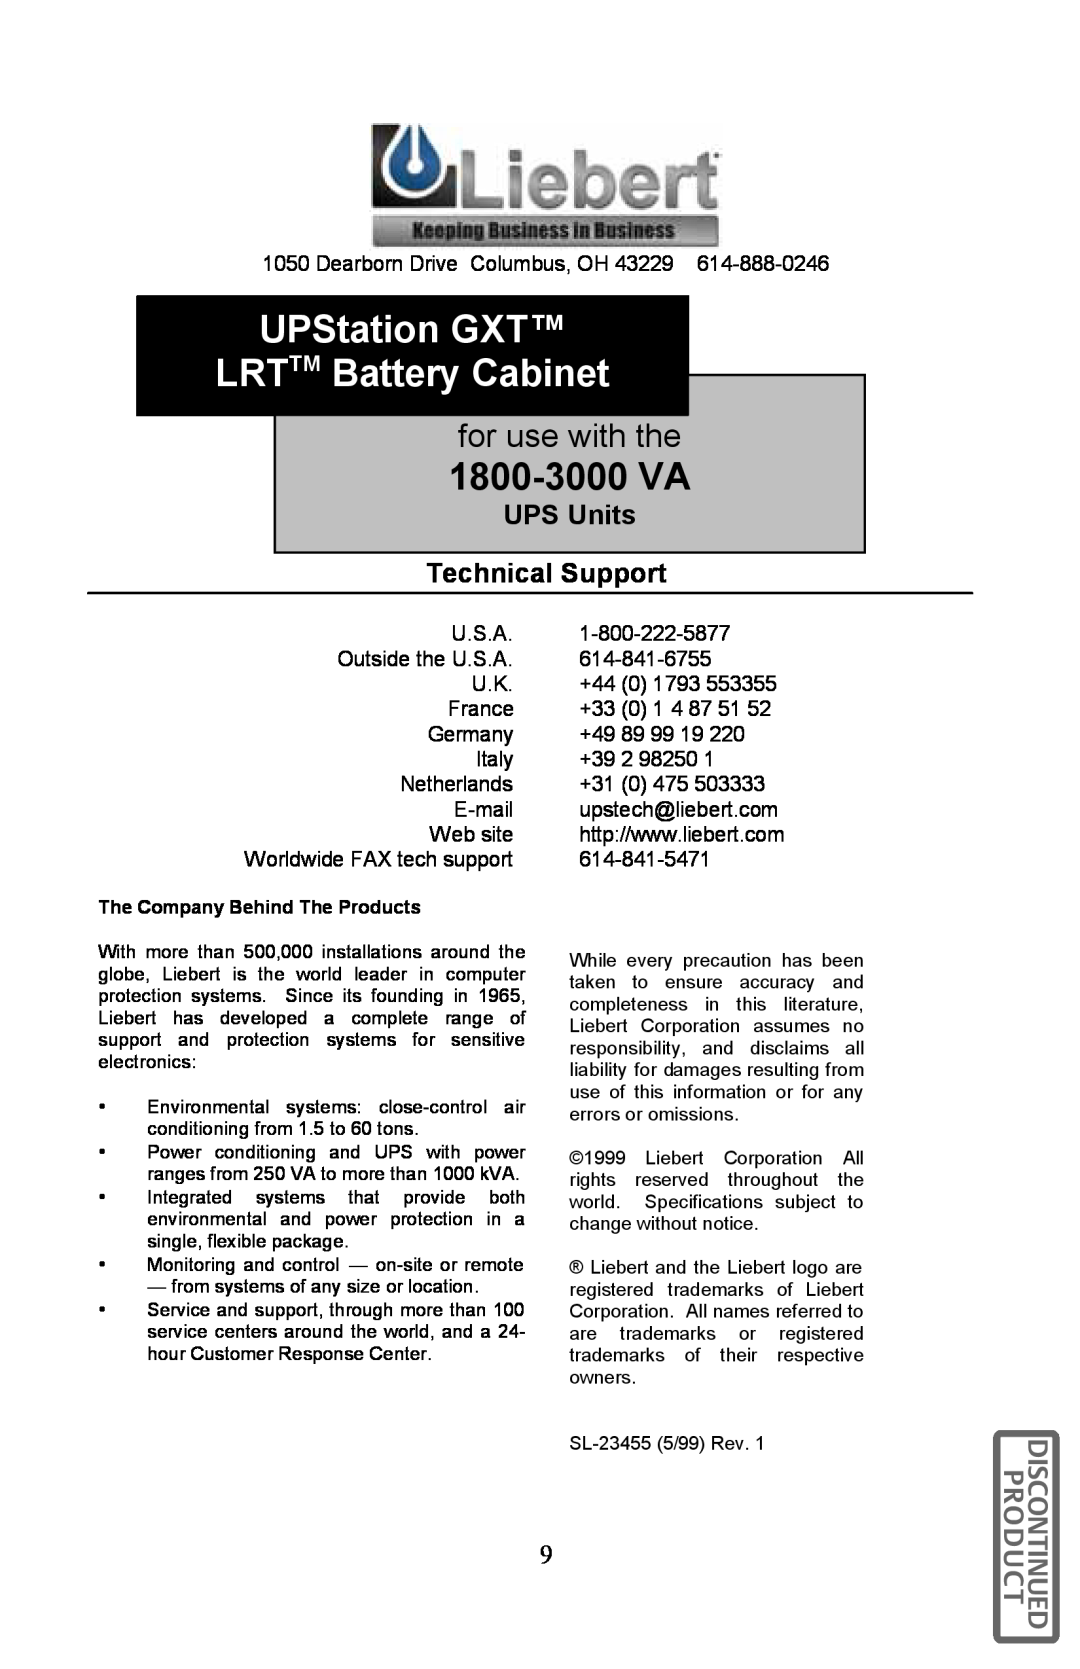 Liebert GXT96VLRT2UL UPStation GXT LRTTM Battery Cabinet, 1800-3000 VA, for use with the, UPS Units Technical Support 